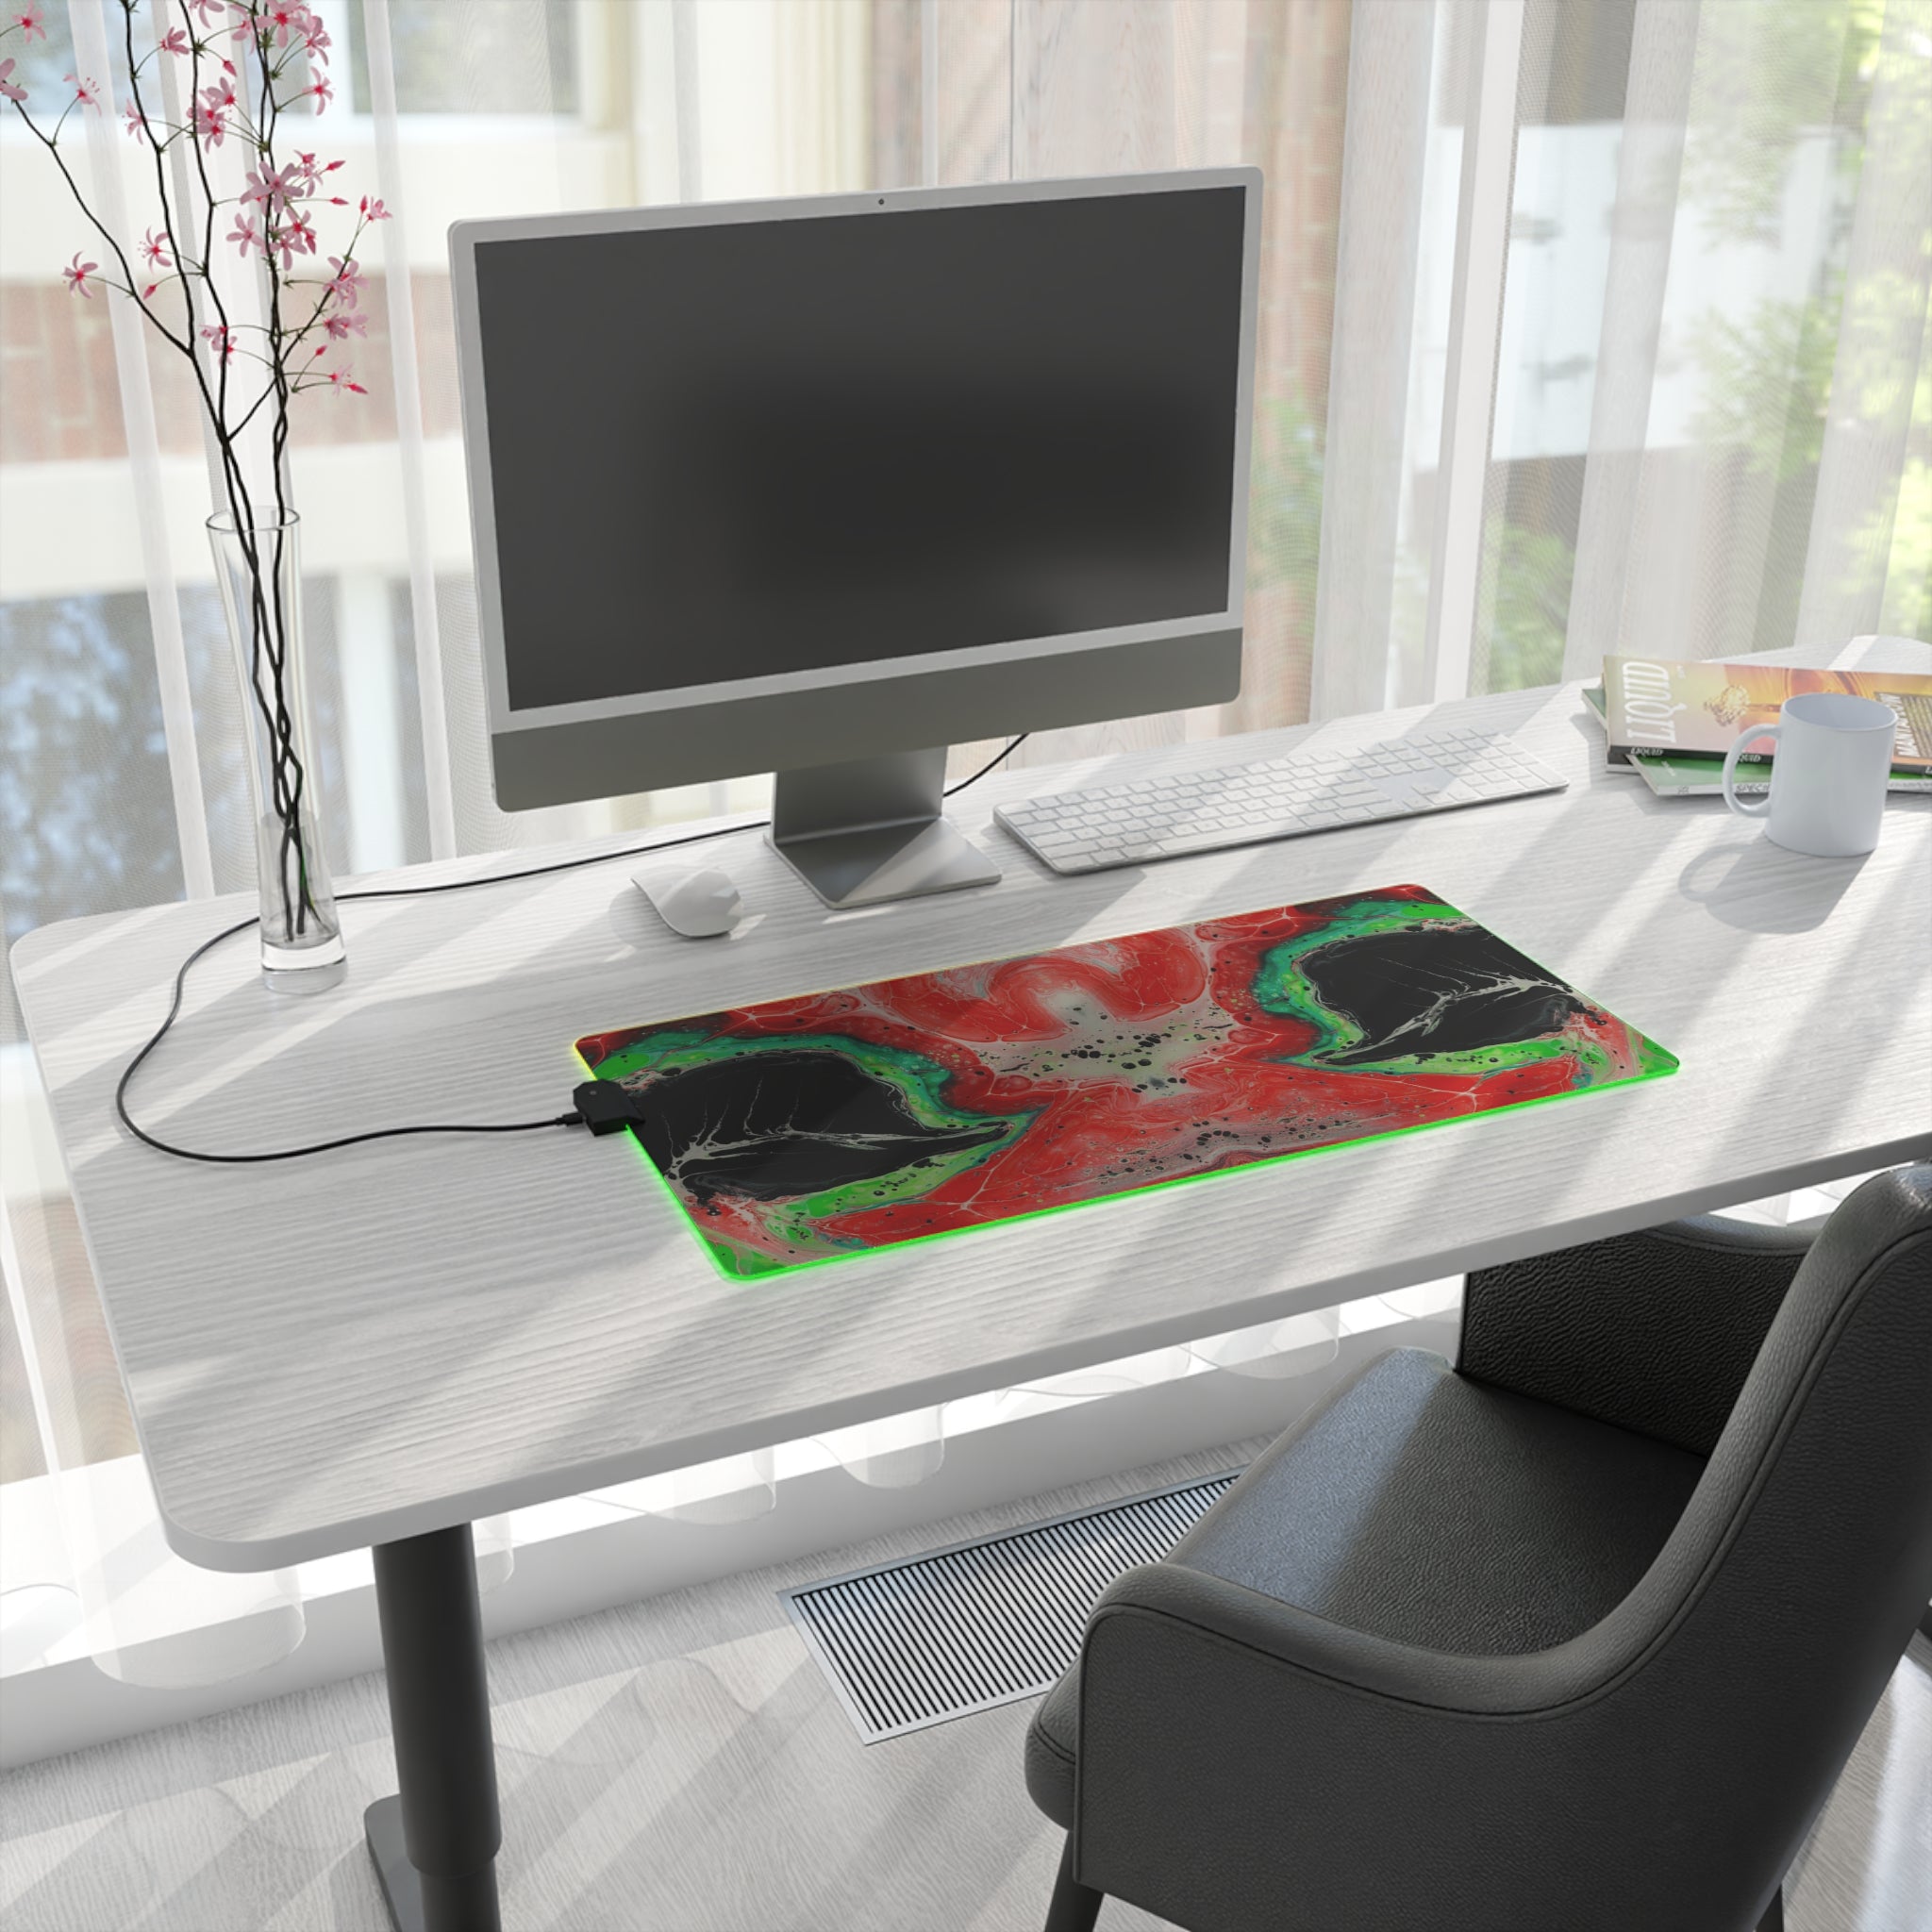 Cameron Creations - LED Gaming Mouse Pad - Portal Block - 23"x11"